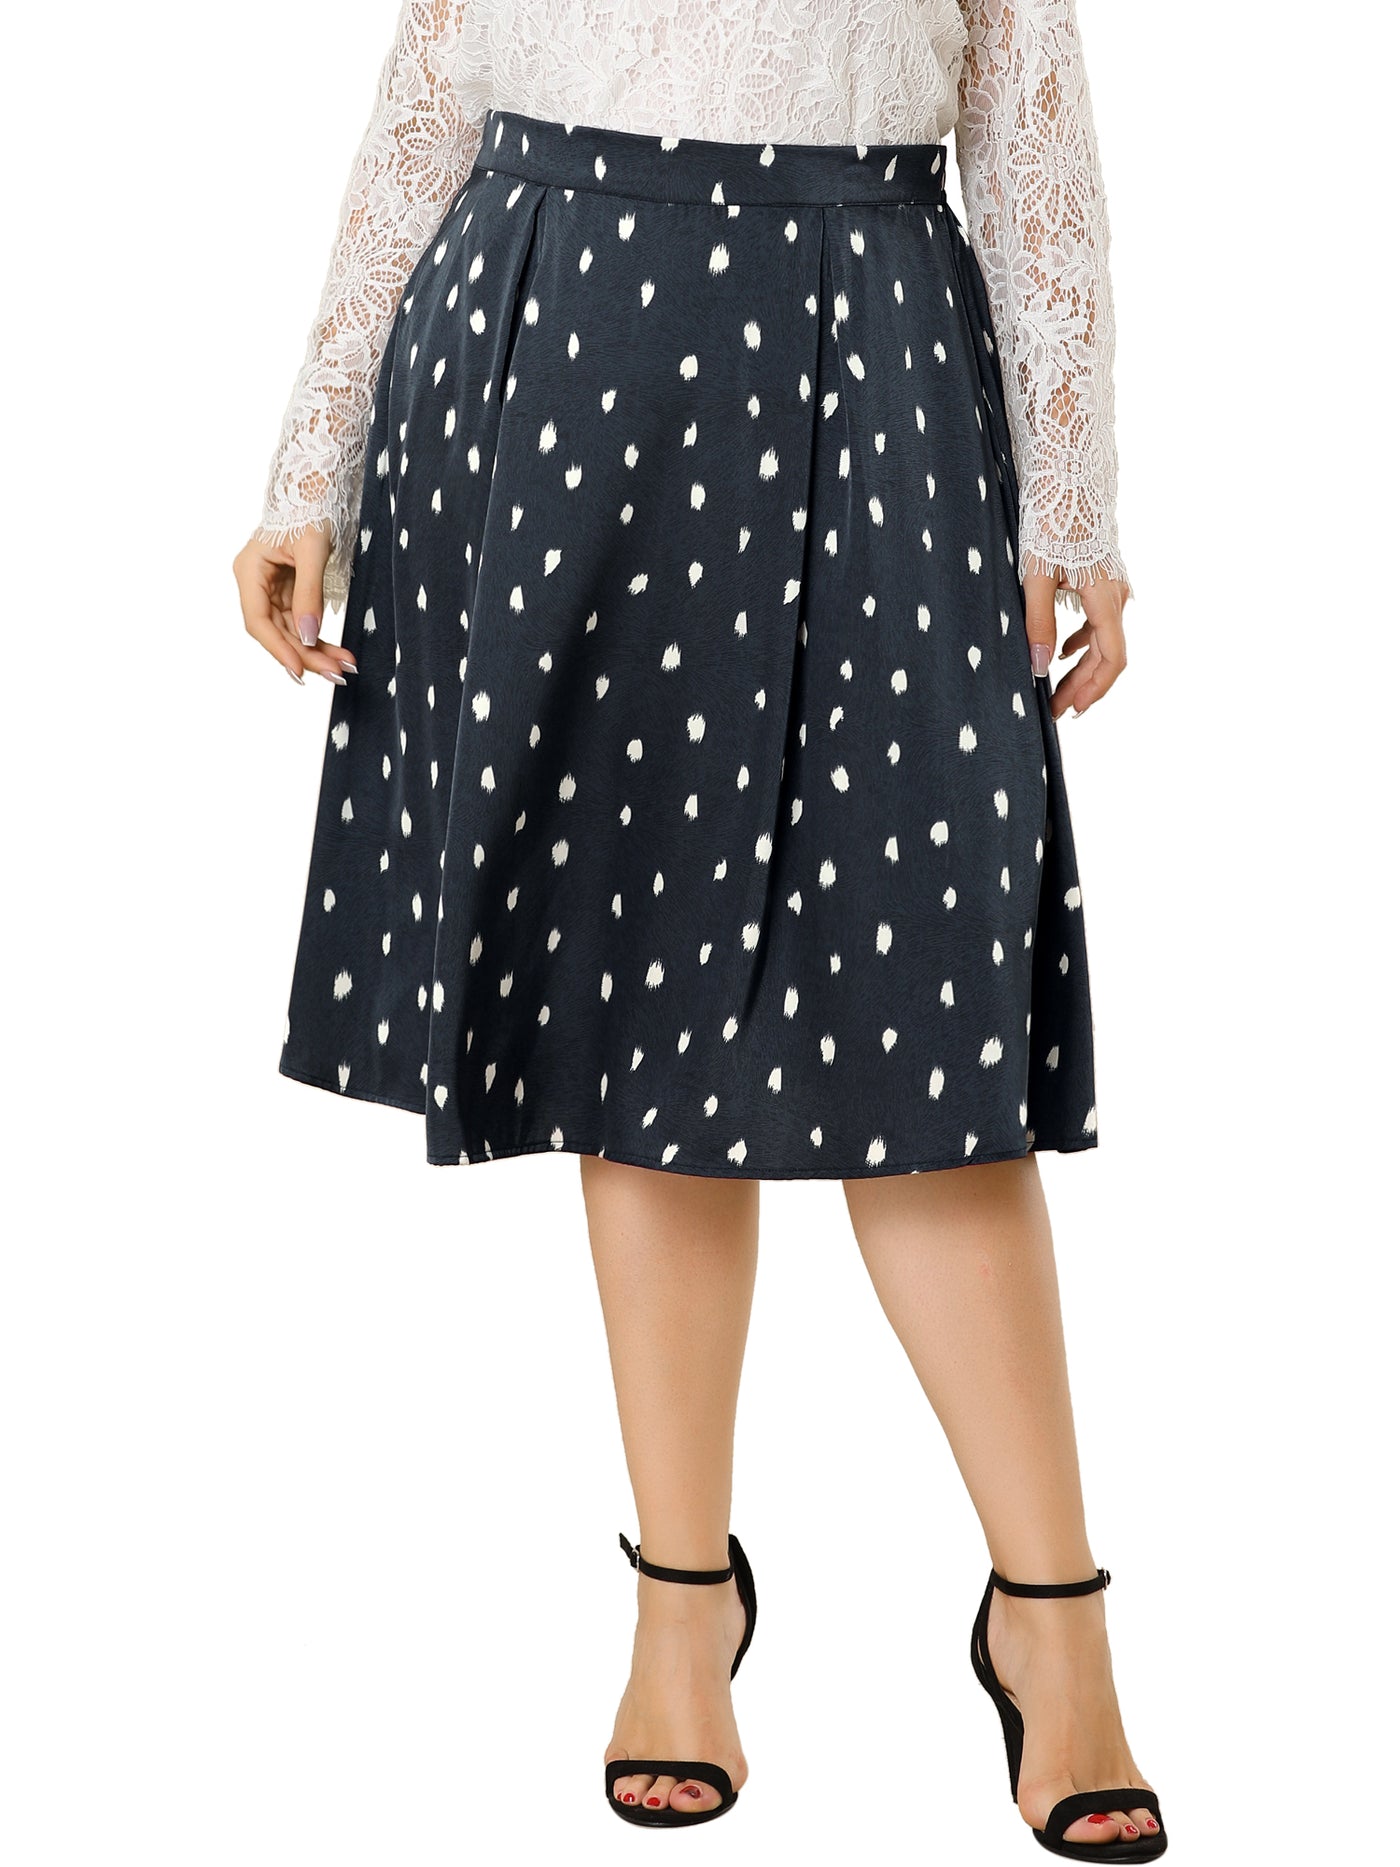 Bublédon Elegant Plus Size A Line Polyester Abstract Dot Skirt